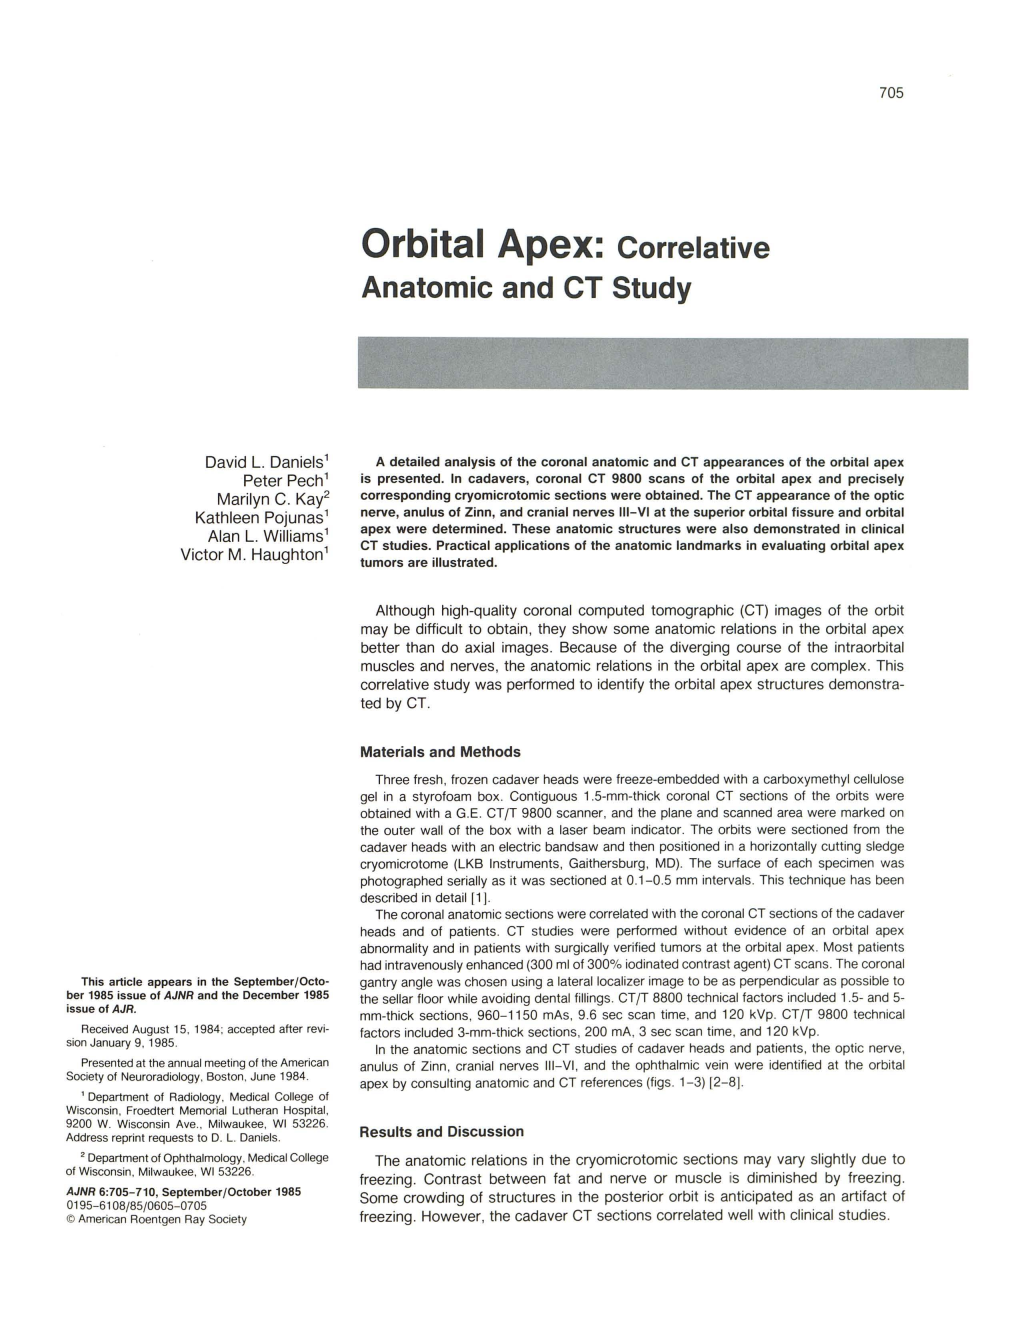 Orbital Apex: Correlative Anatomic and CT Study